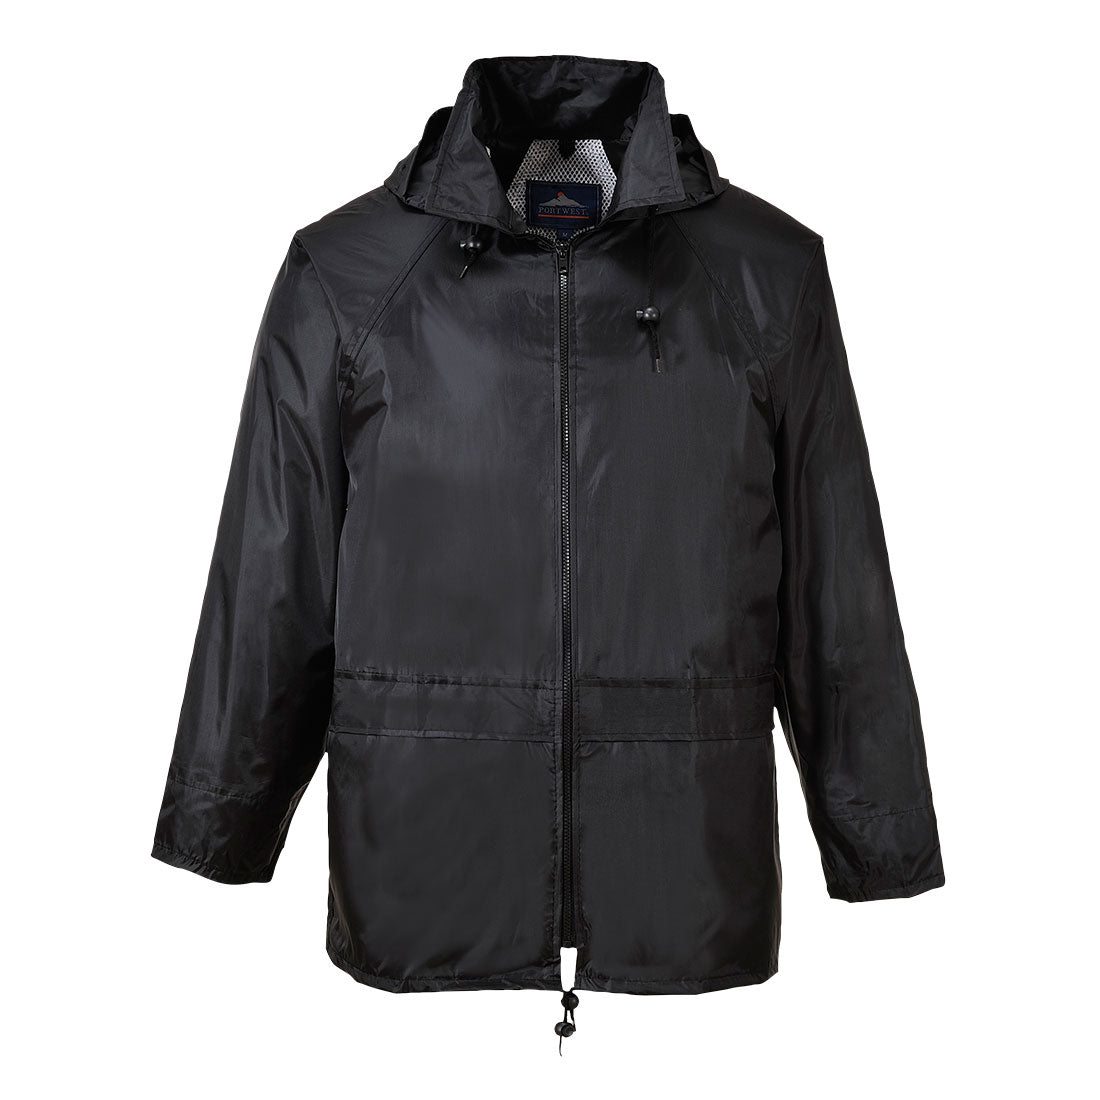 Portwest S440 Black Sz L Classic Rain Jacket Coat Waterproof Hooded Zipped